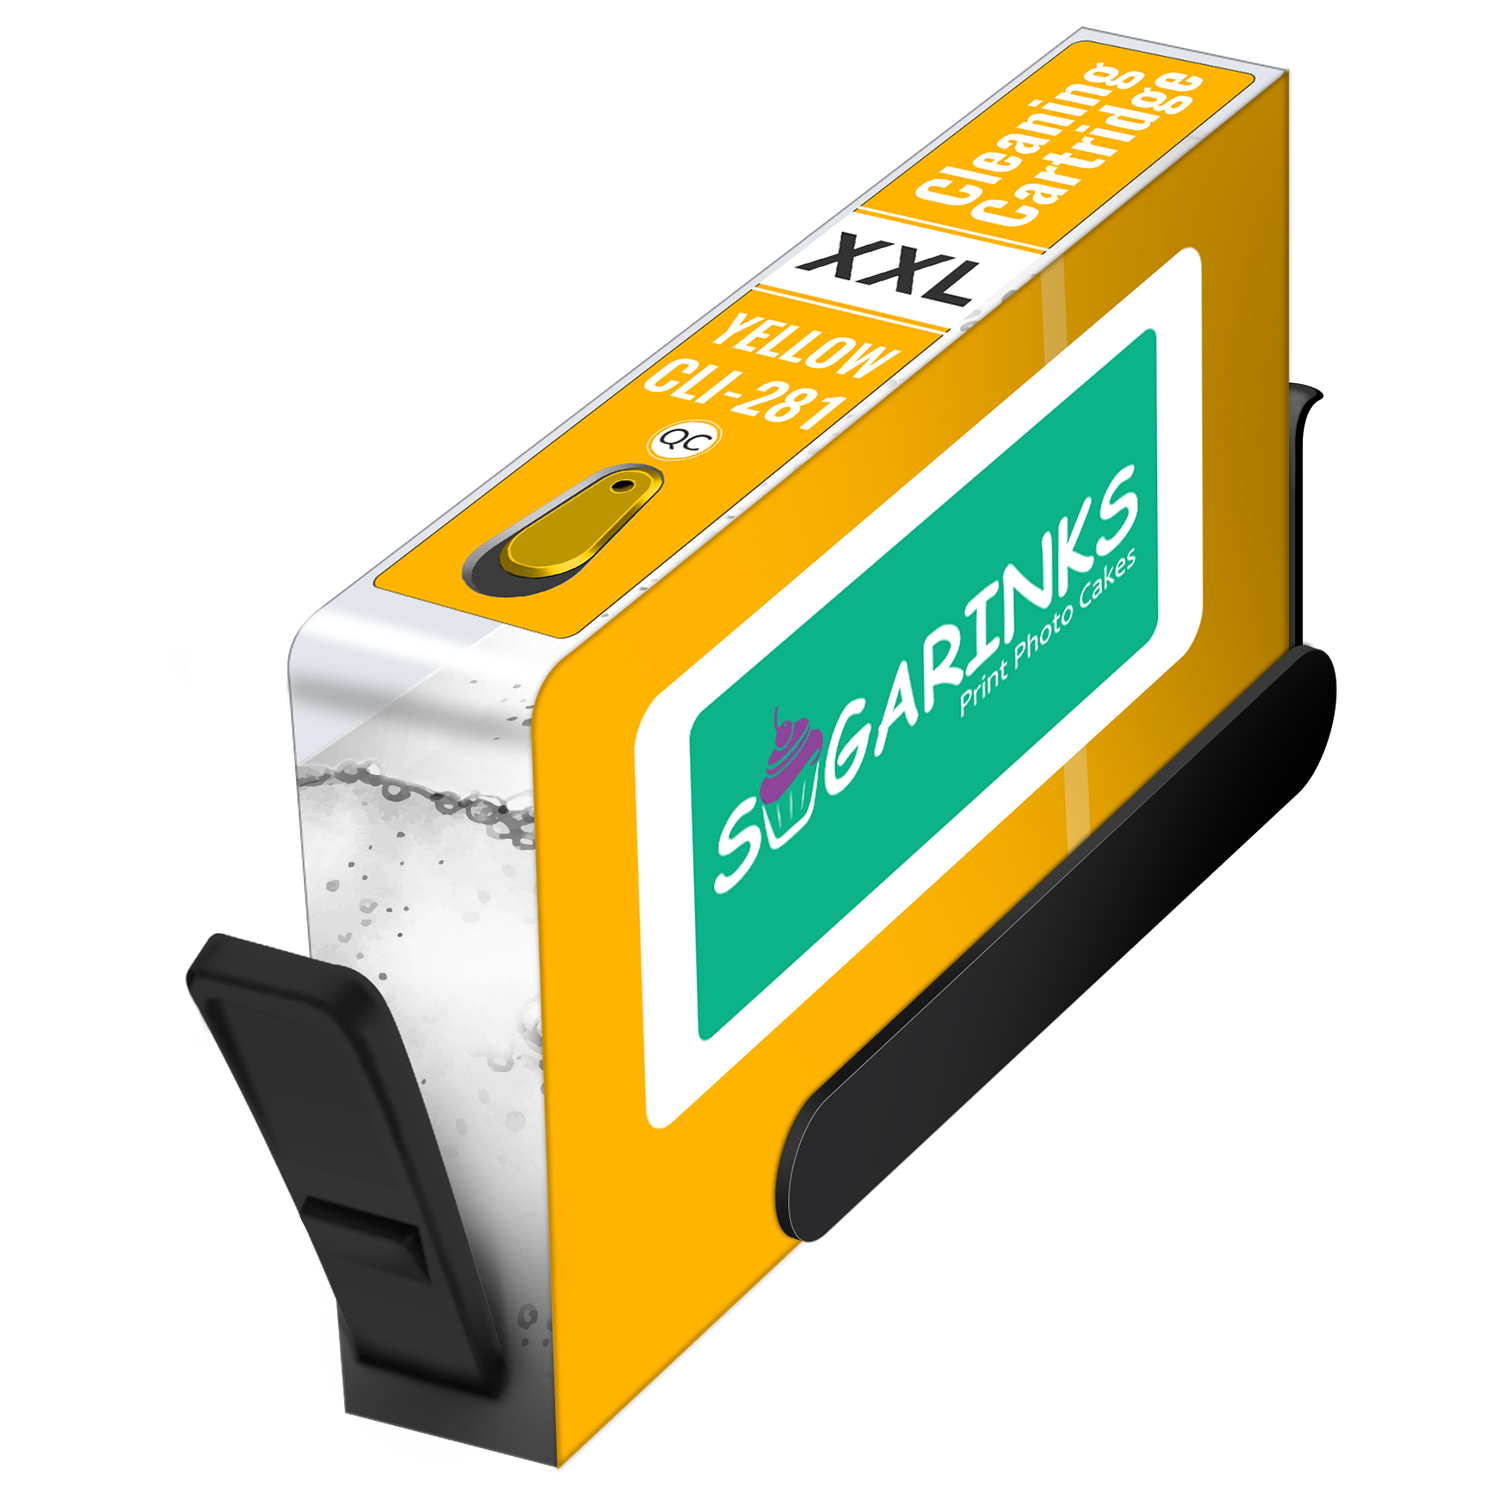 Sugarinks Edible Cleaning Cartridge CLI-281XL for Canon Edible Printer – Yellow